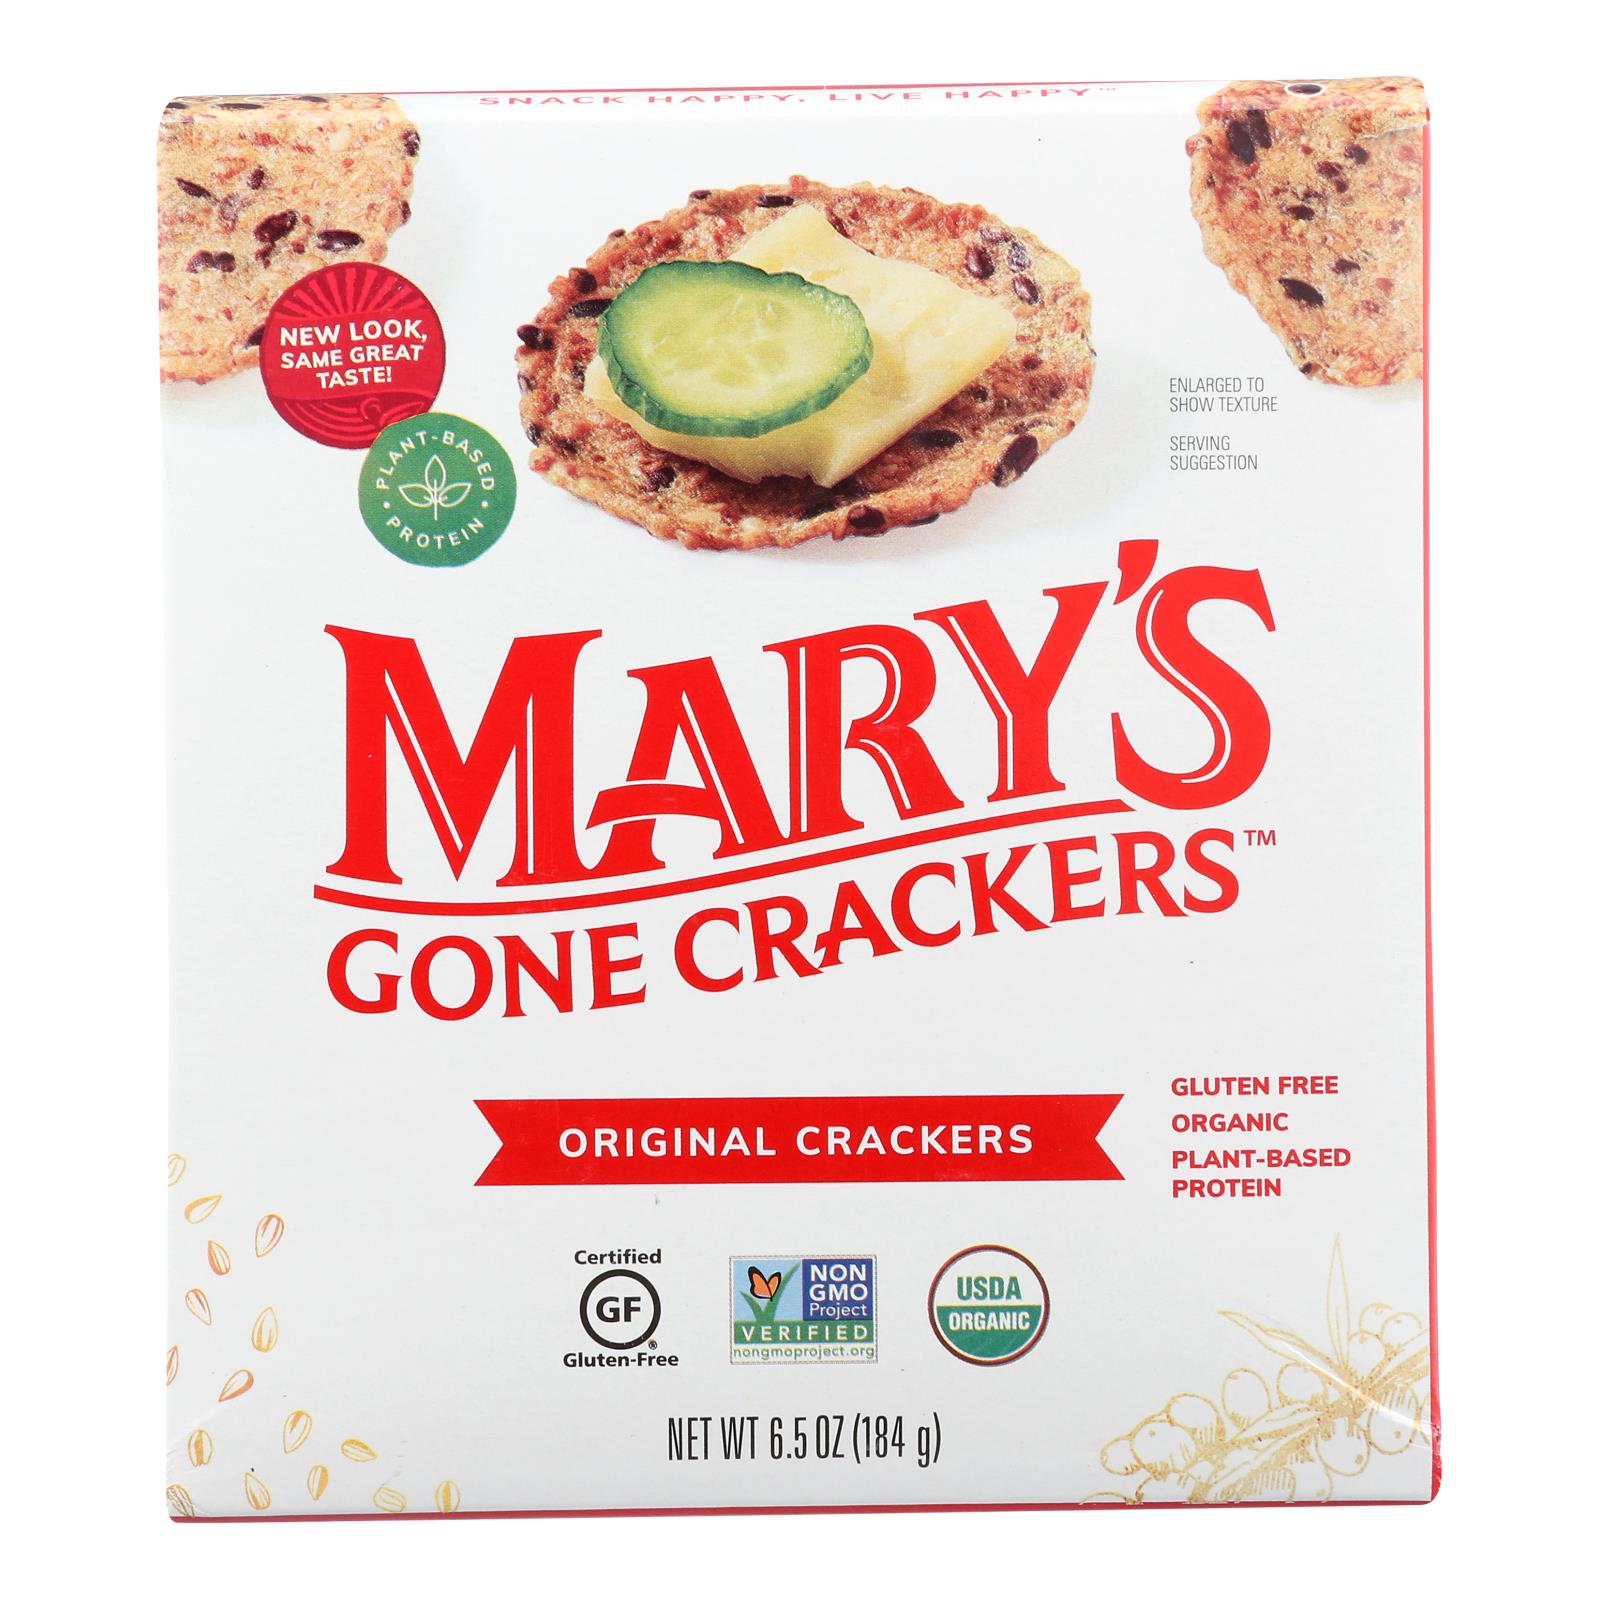 Craquelins de Mary's Gone, Mary's Gone Original Crackers - Caisse de 6 - 6.5 OZ (paquet de 6)